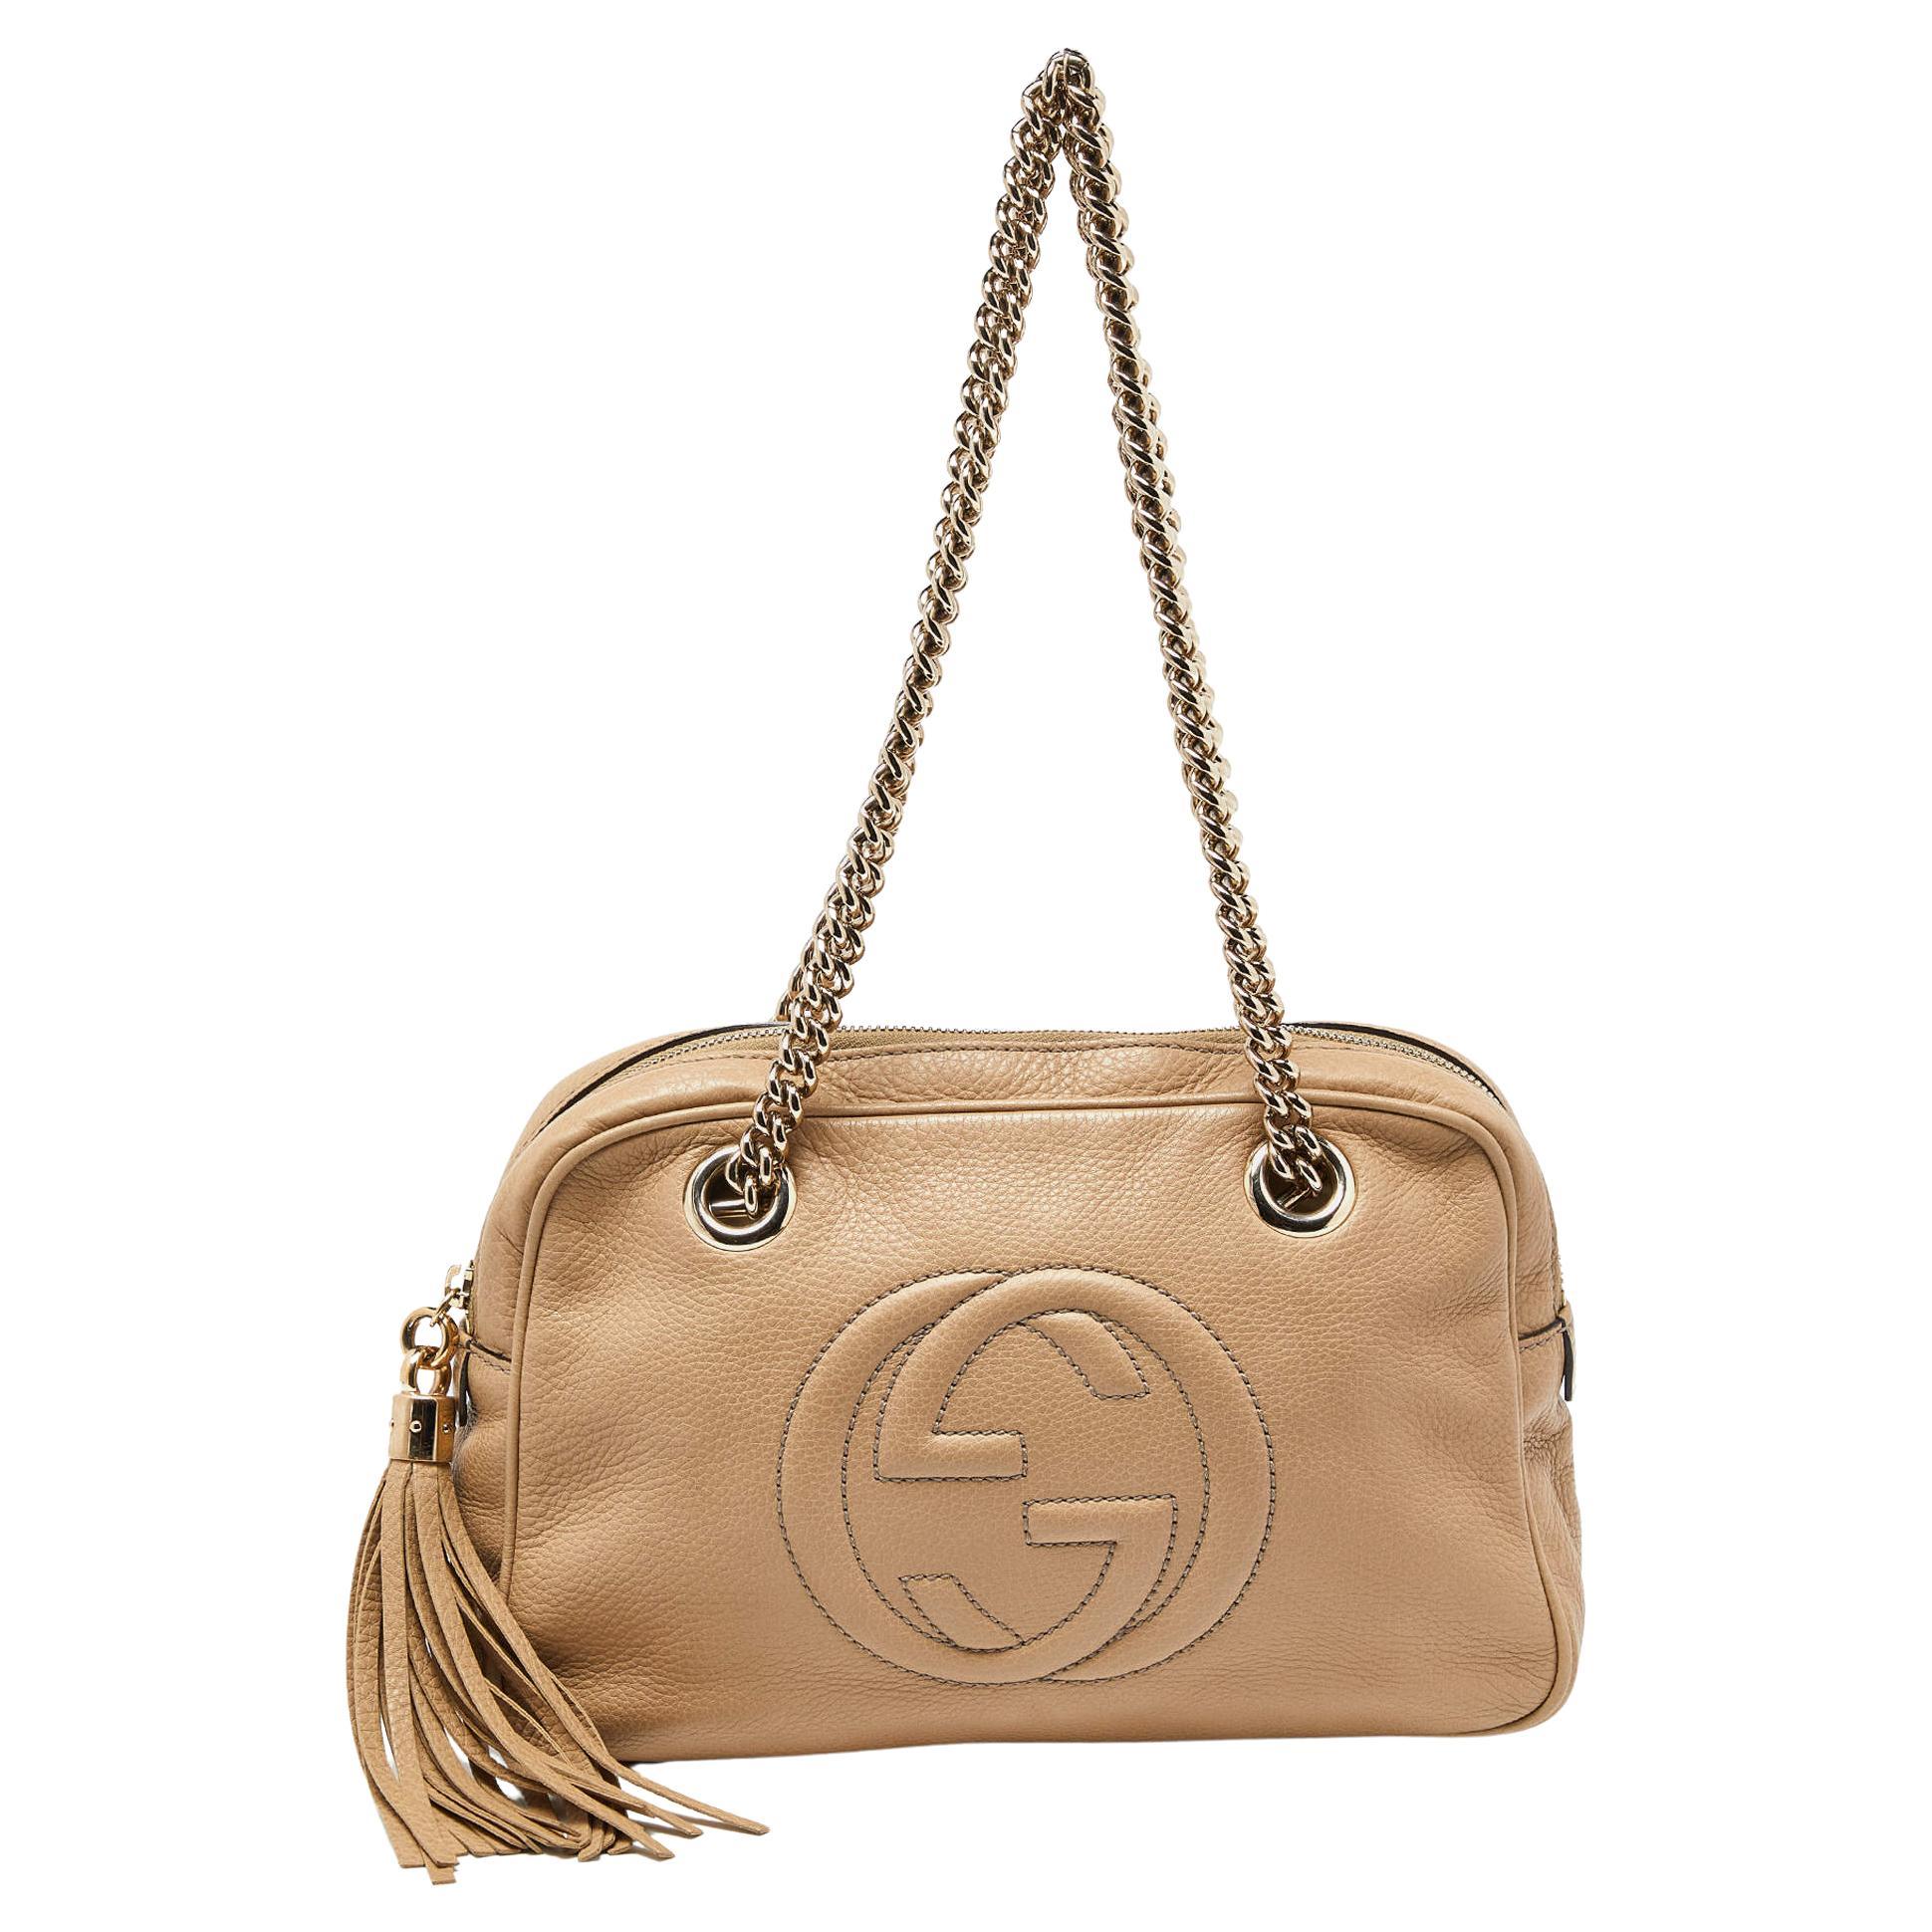 Gucci Beige Leather Medium Soho Chain Shoulder Bag For Sale